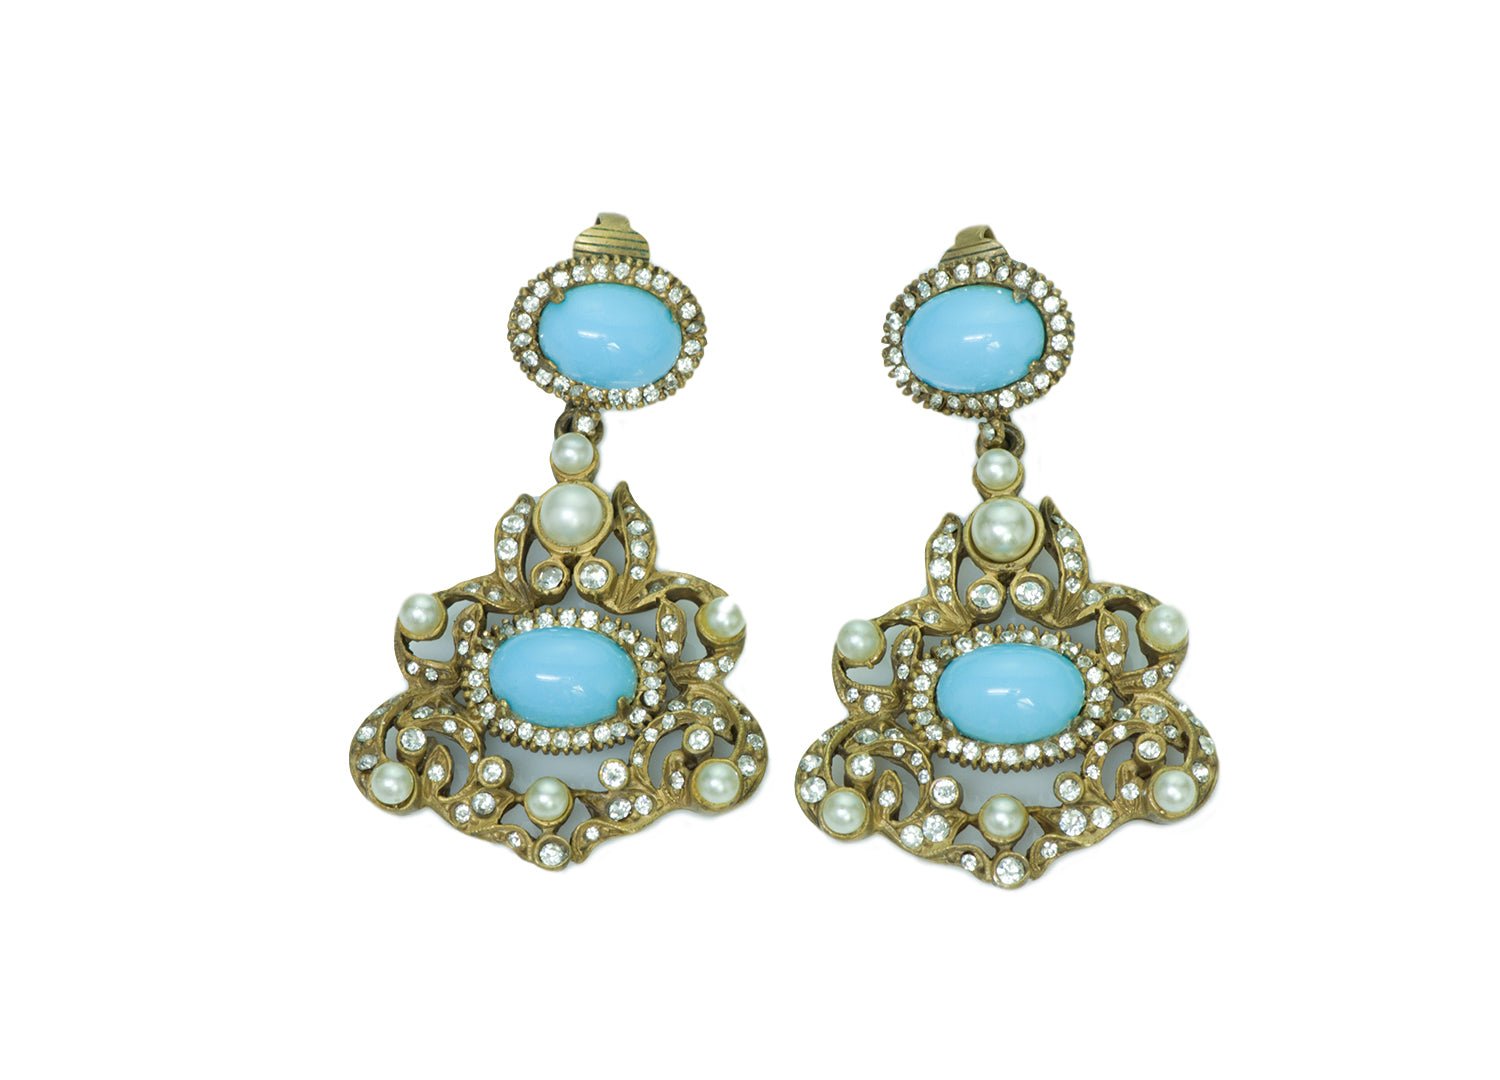 Kenneth Jay Lane Turquoise Pearl Earrings